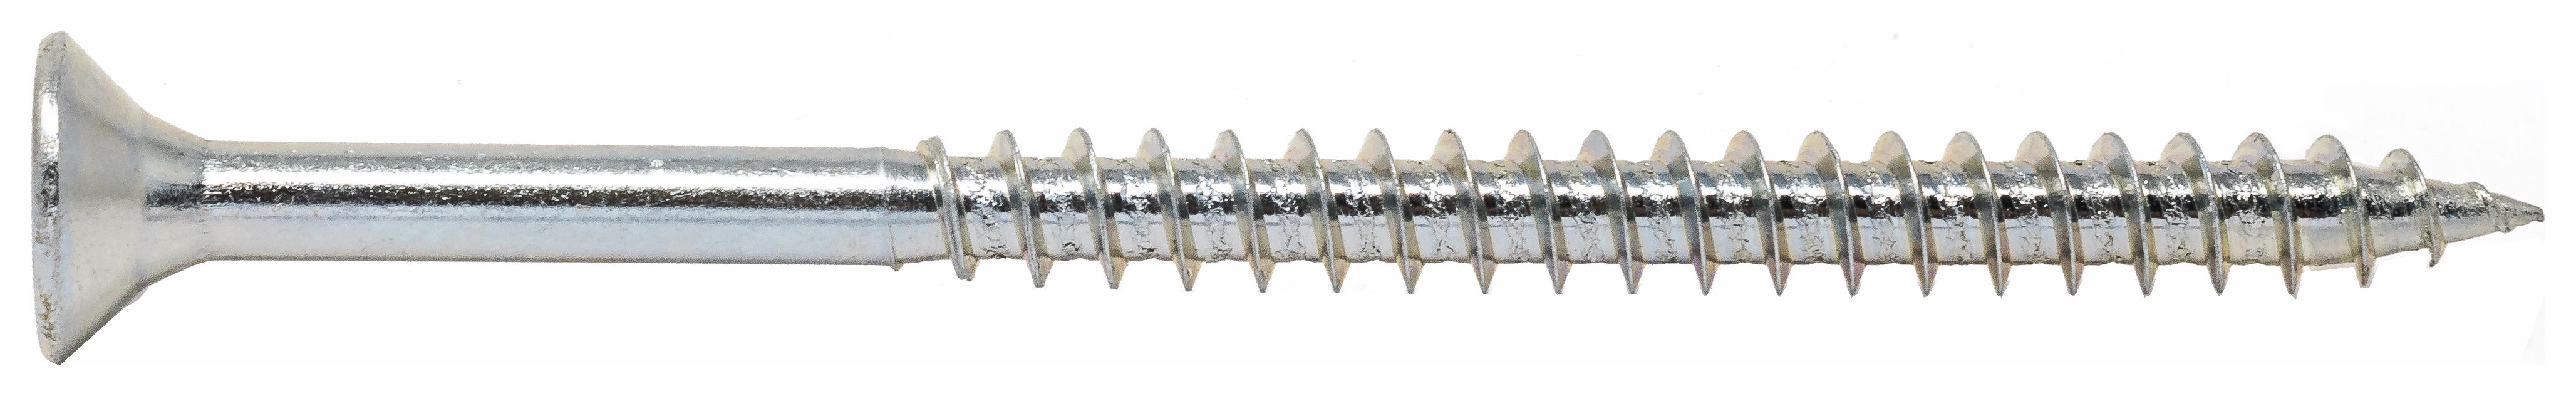 Wickes Single Thread Zinc Plated Screw - 3.5 X 20mm Pack Of 200